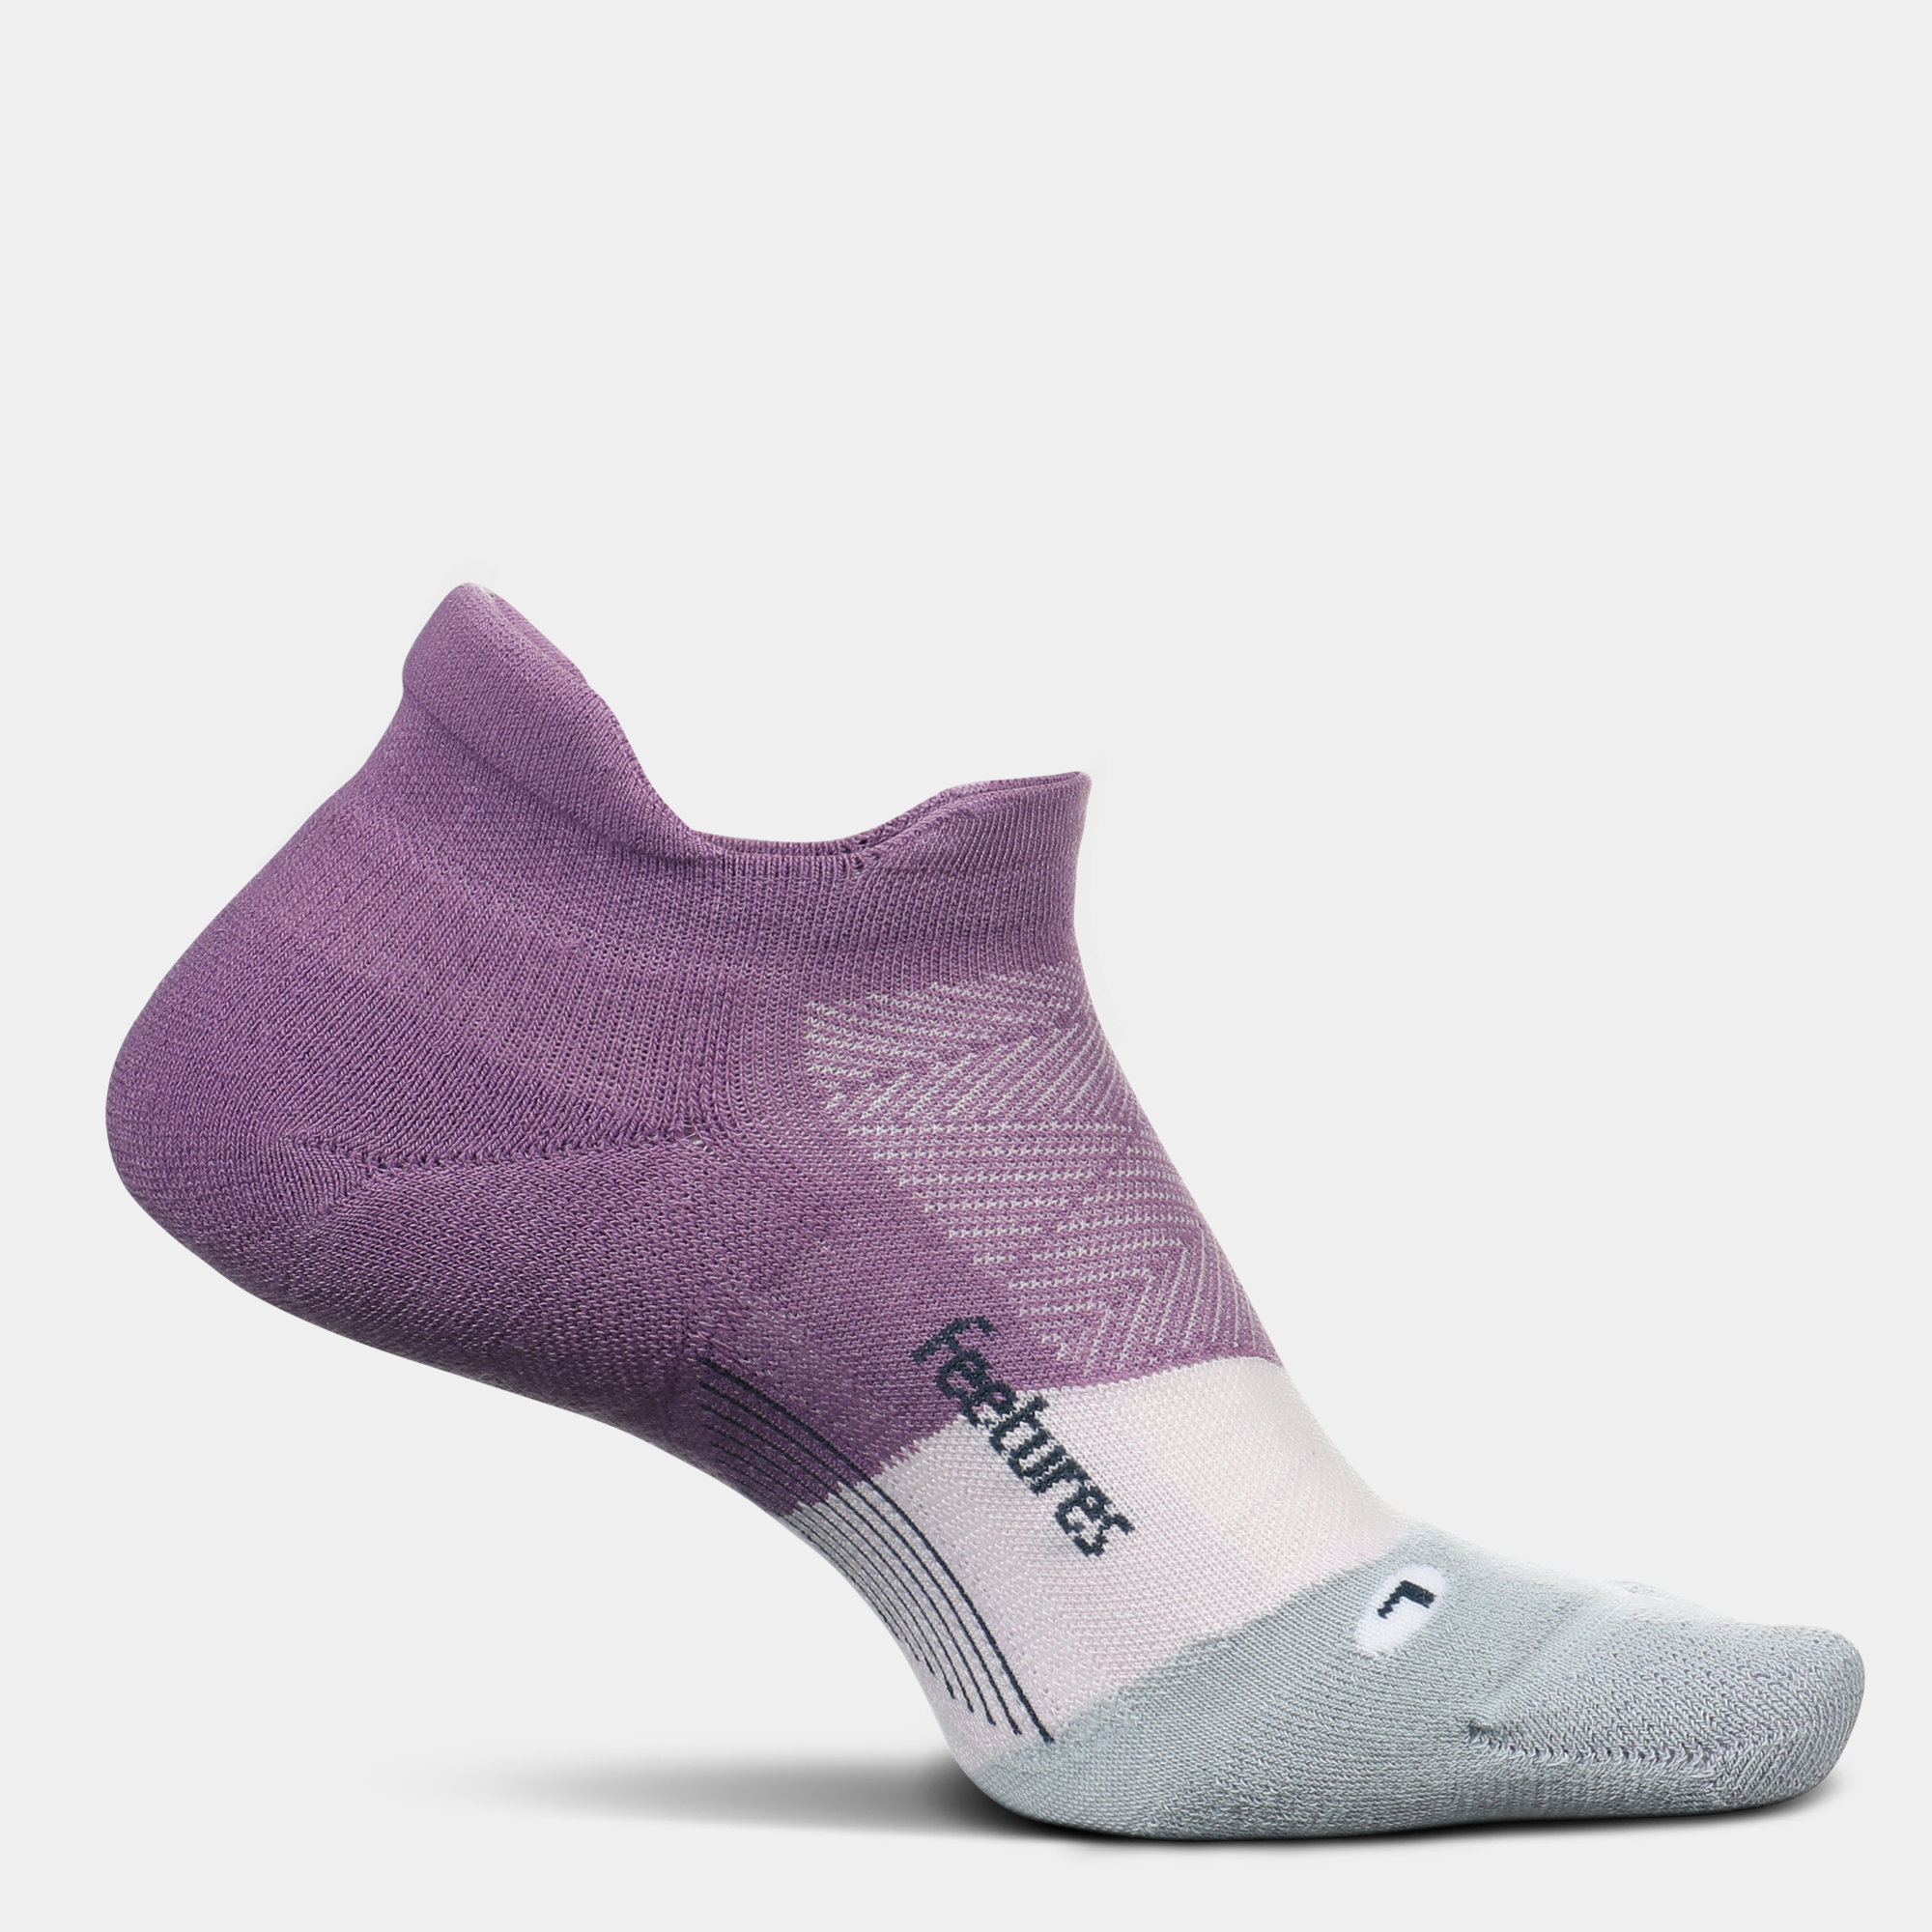 Feetures Elite Ultra Light Cushion No Show Tab GEAR - Socks BLACK